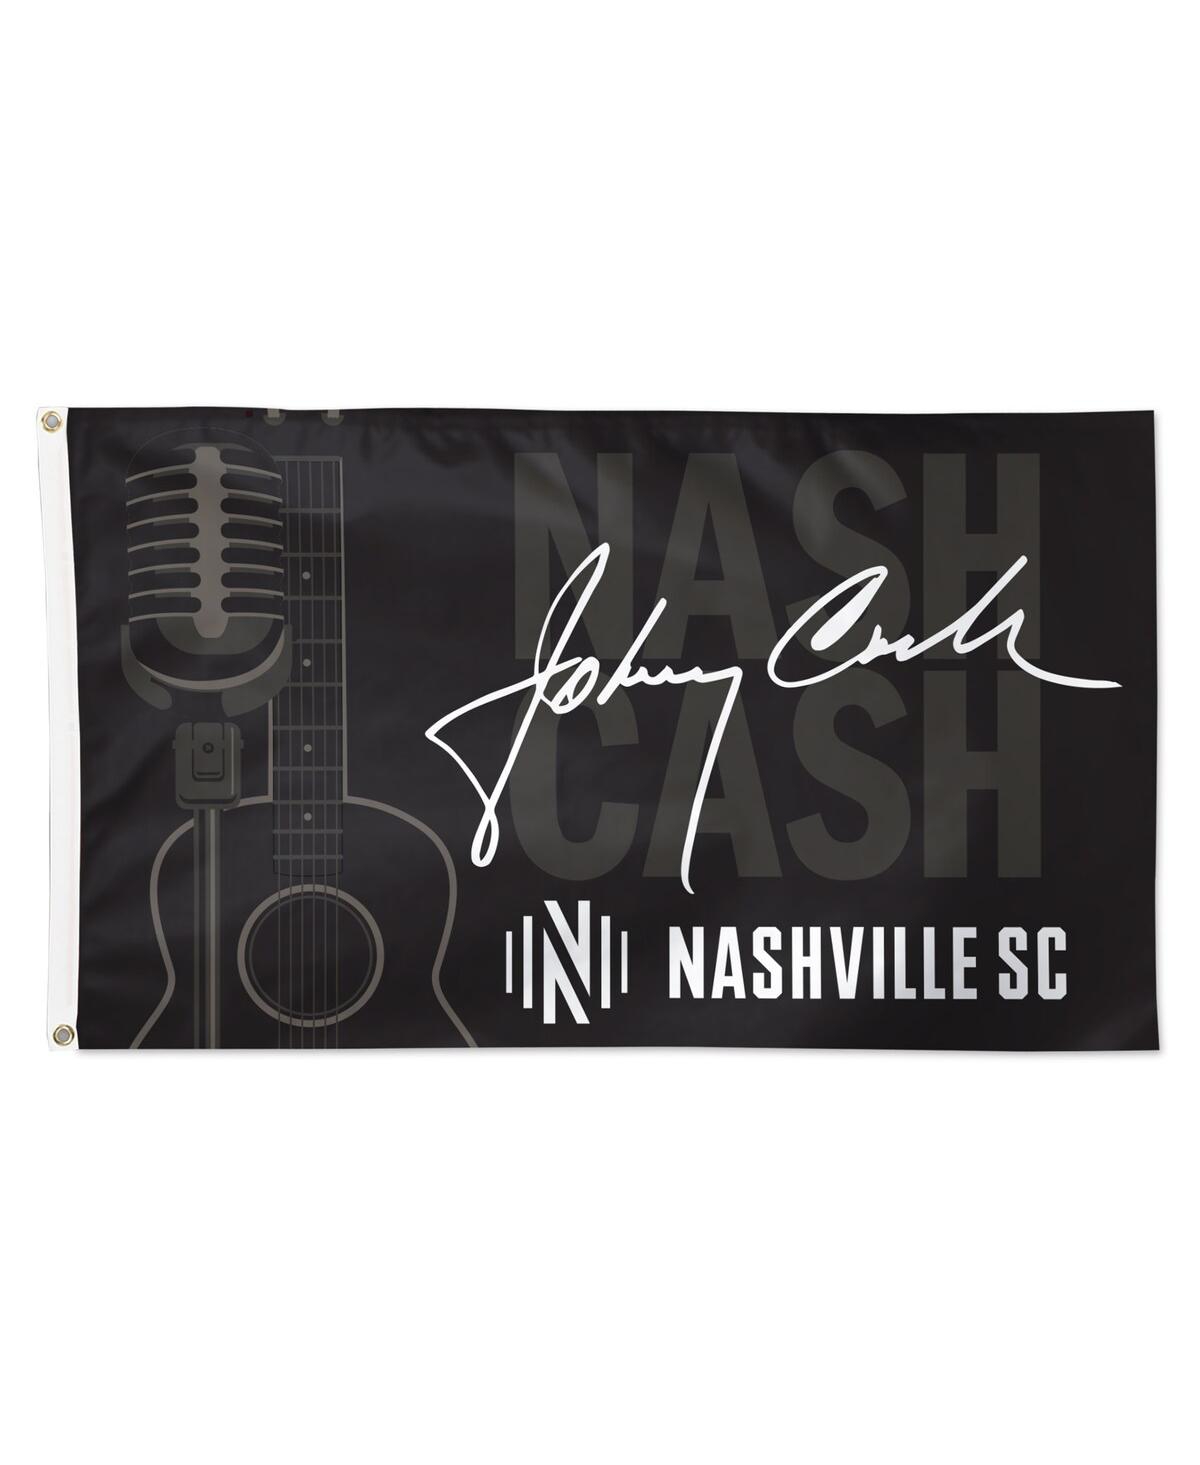 Nashville Sc x Johnny Cash 3' x 5' One-Sided Deluxe Flag - Black